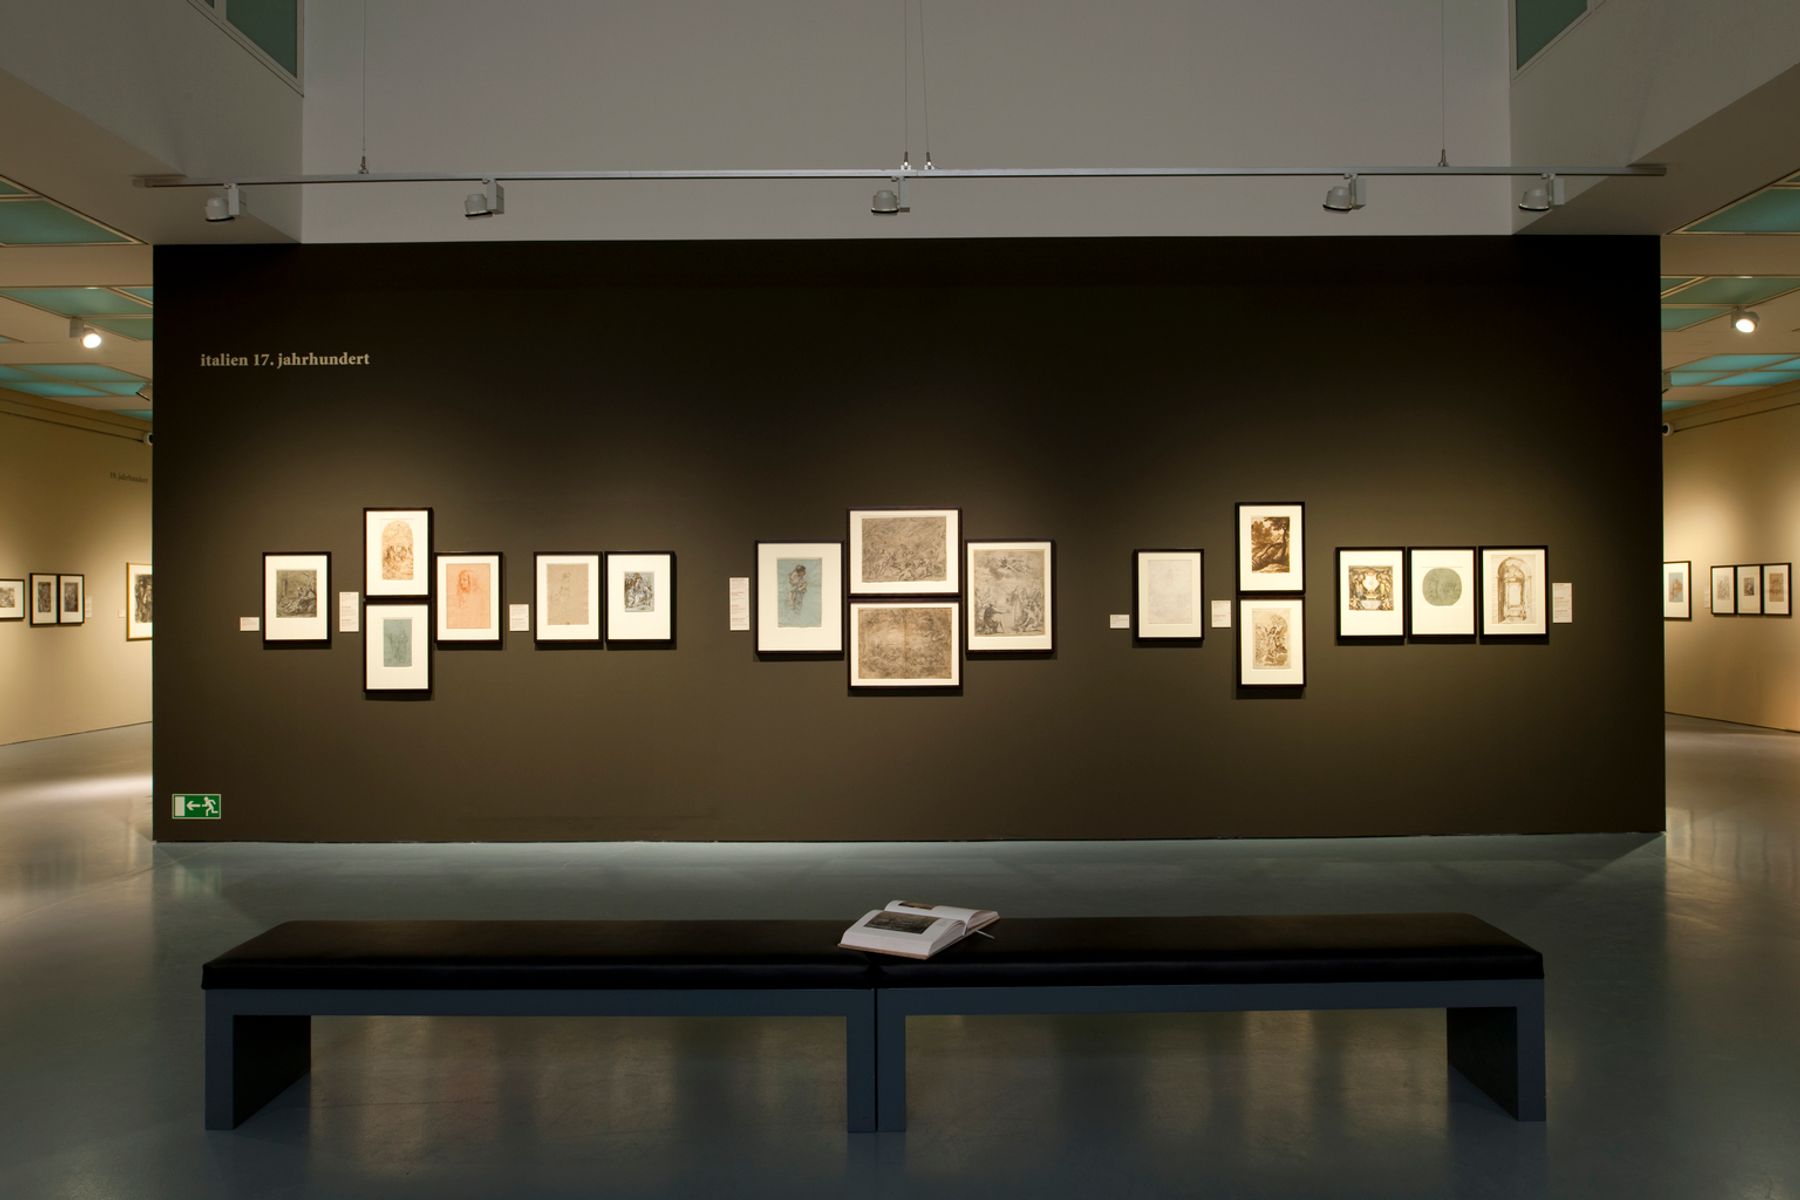 Museo Kunst Palast, esposizione "Su carta", Düsseldorf. Fotografia: Thomas Mayer, Neuss.